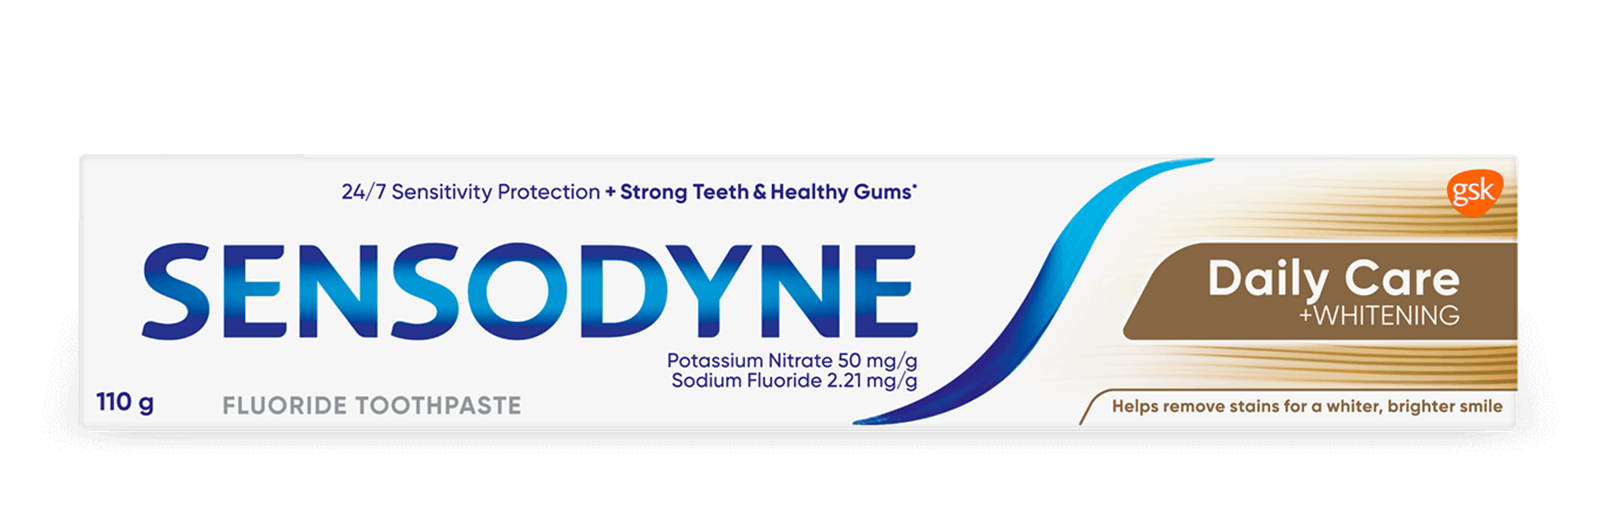 Sensodyne Daily Care Whitening toothpaste